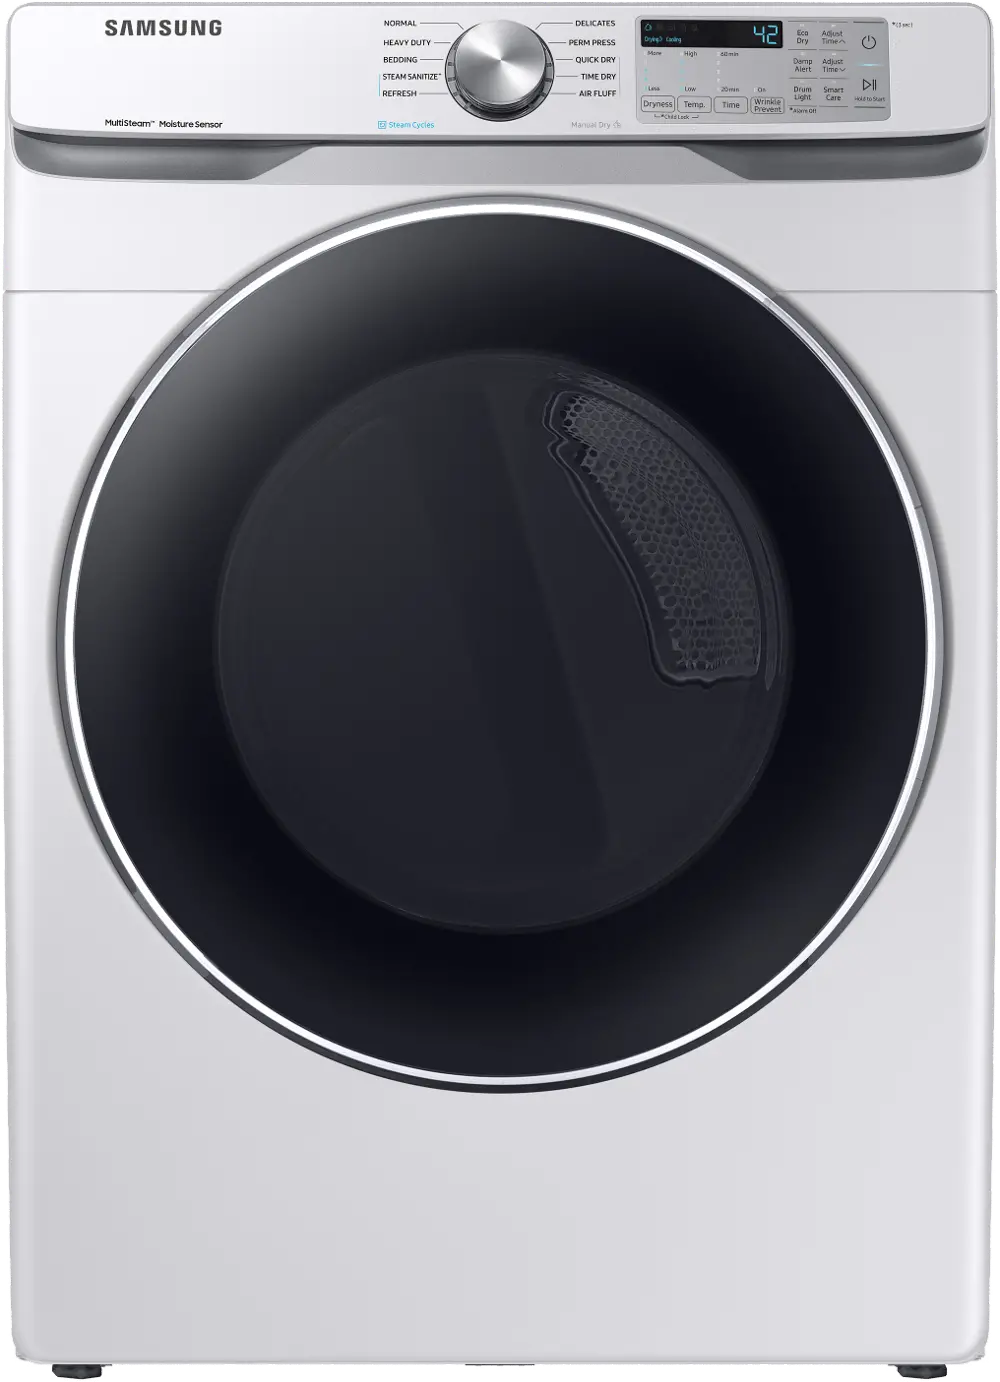 DVE45T6200W Samsung 7.5 cu ft Electric Dryer - White, 45T6200W-1